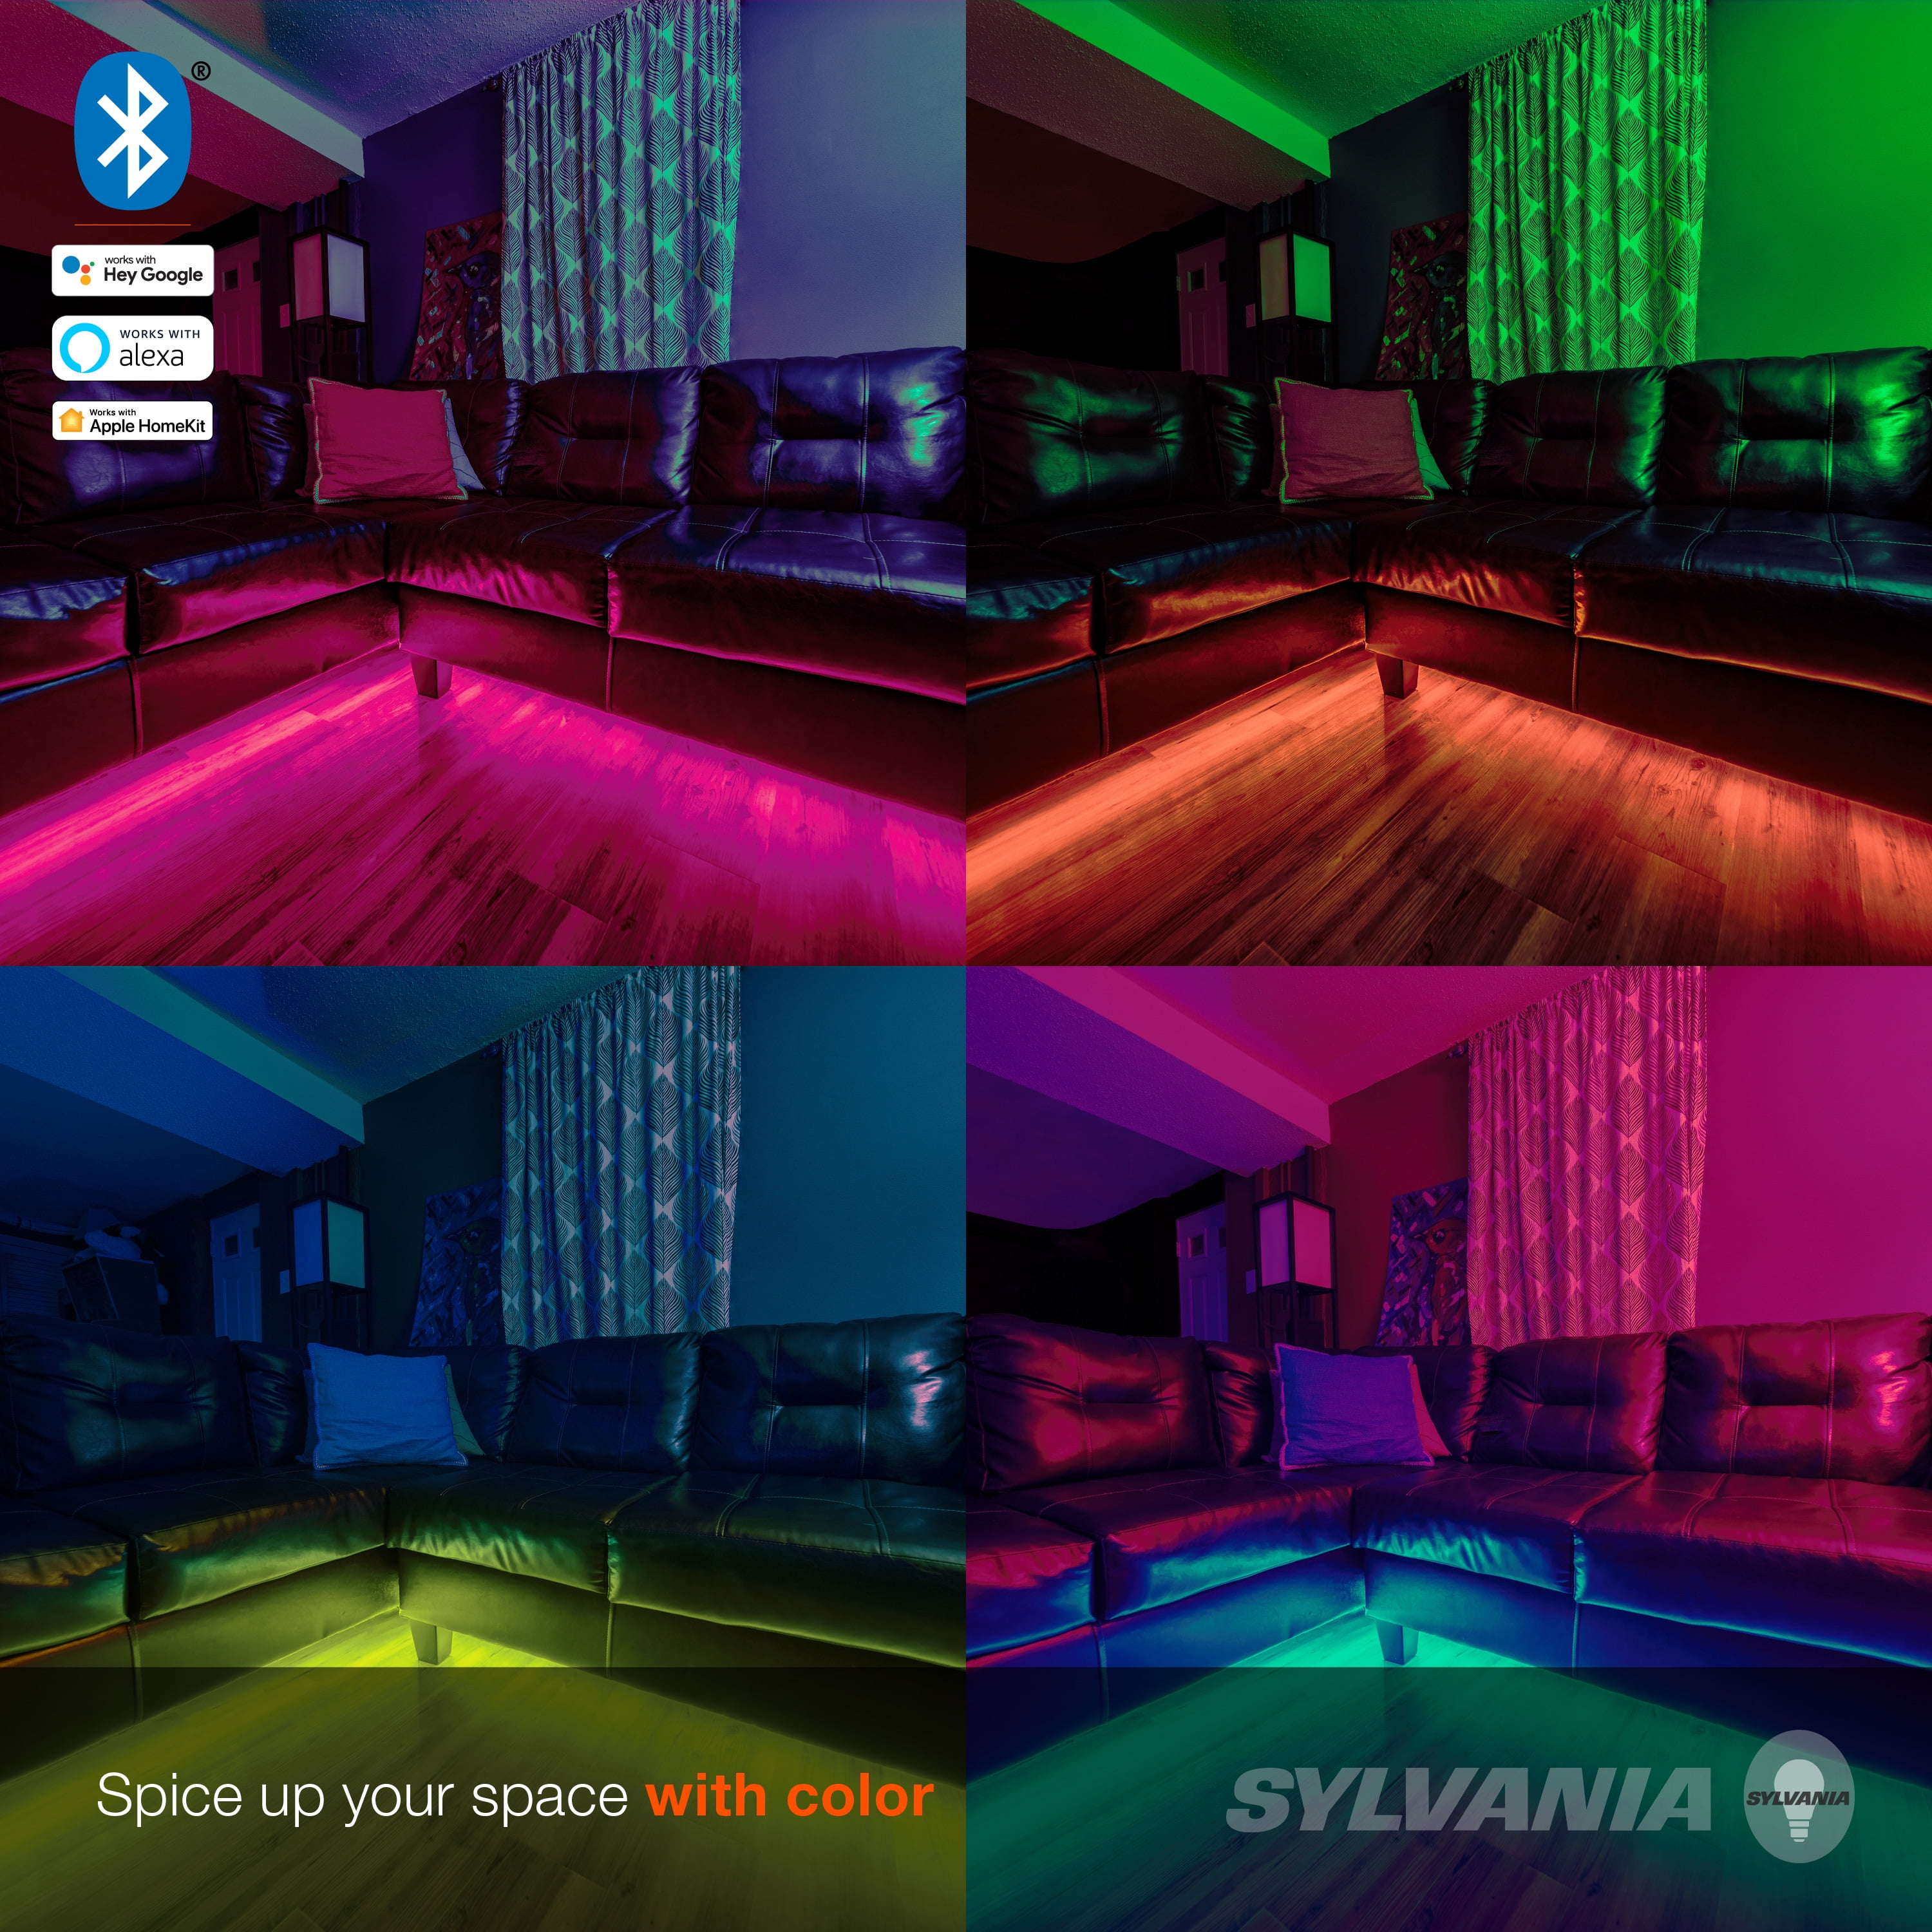 Sylvania Smart Bluetooth Led Flex Light